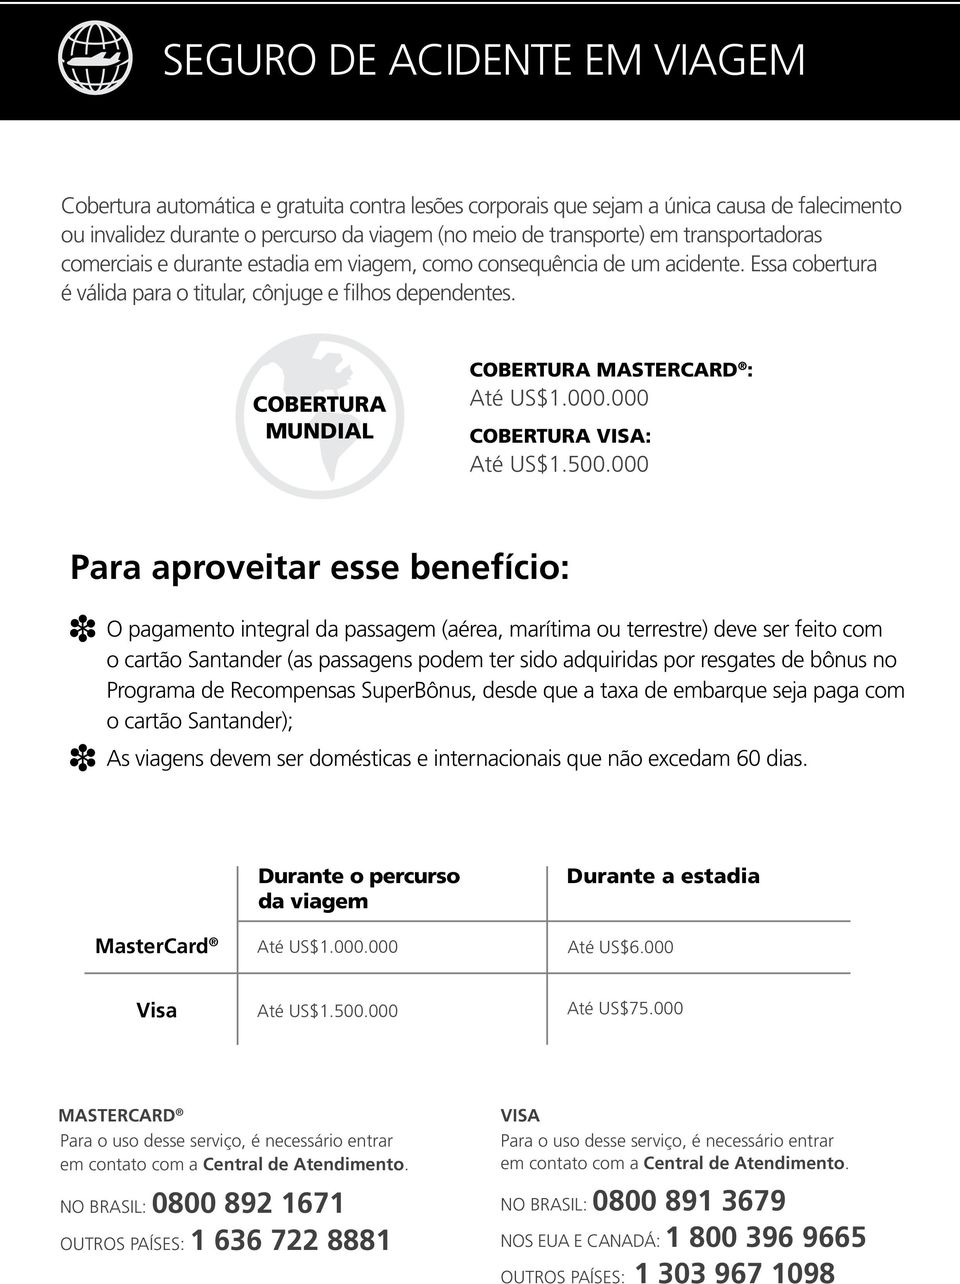 Cobertura mundial Cobertura MasterCard : Até US$1.000.000 Cobertura : Até US$1.500.